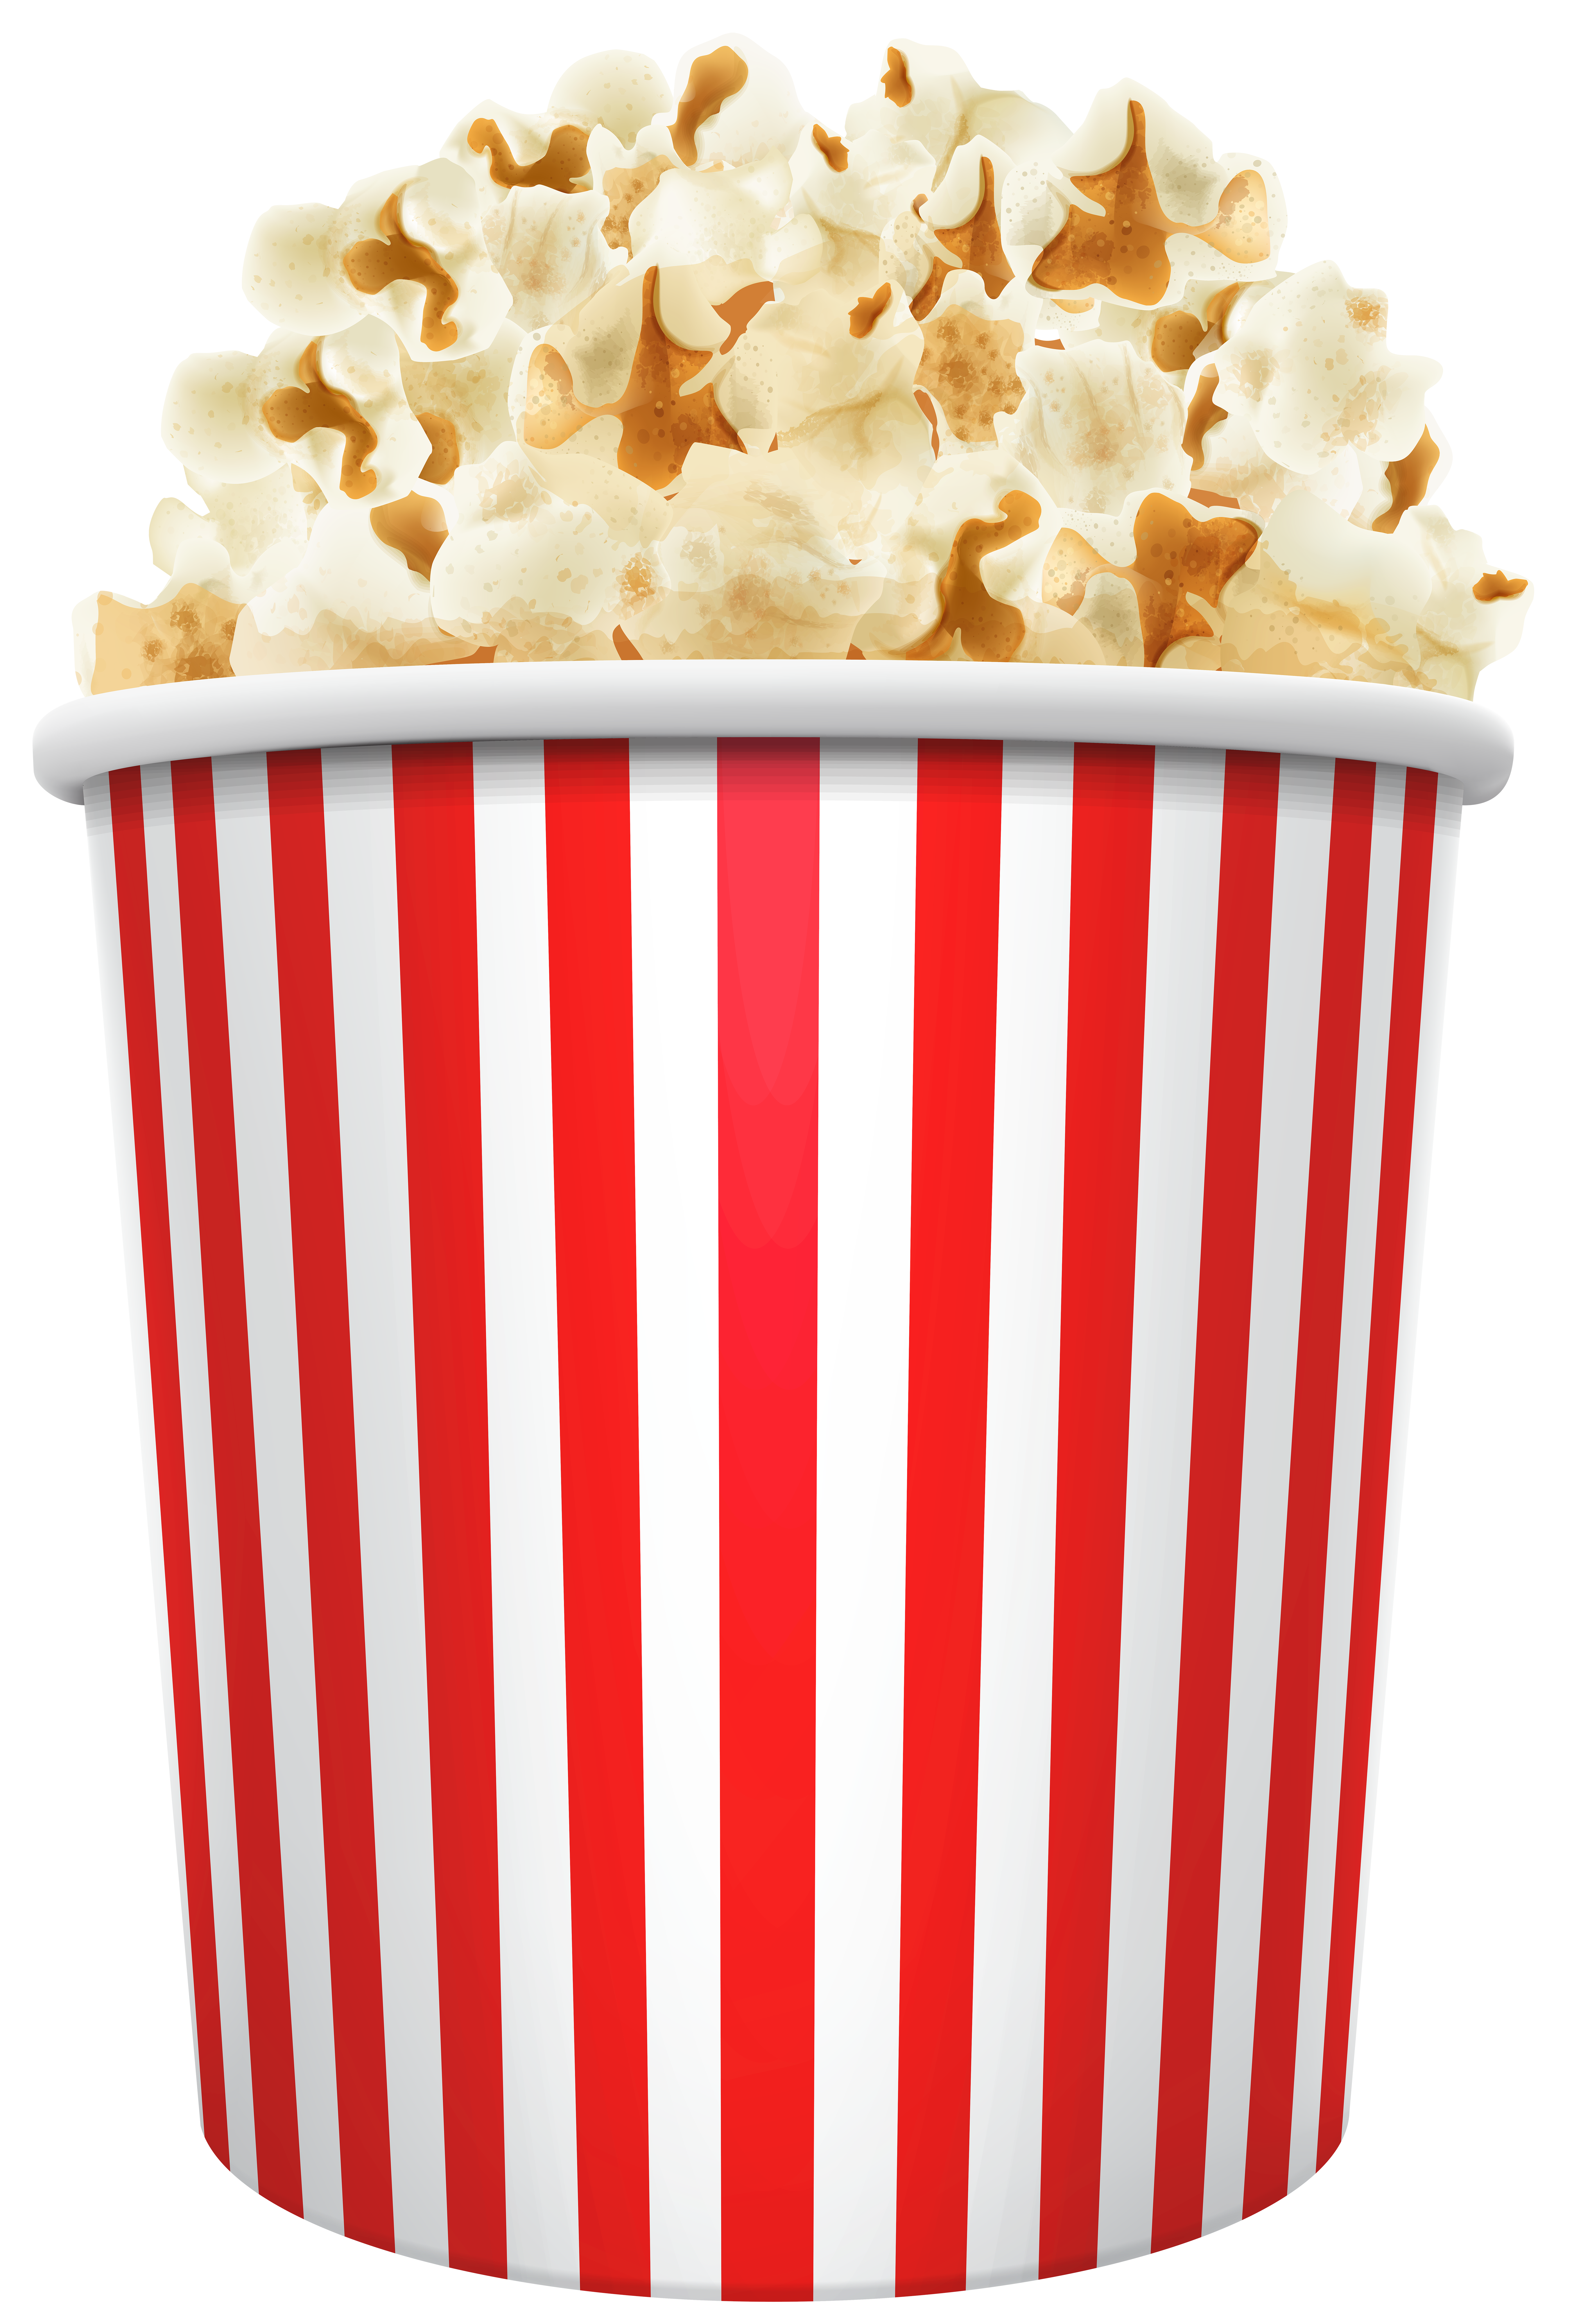 Popcorn Box PNG Clip Art - Best WEB Clipart